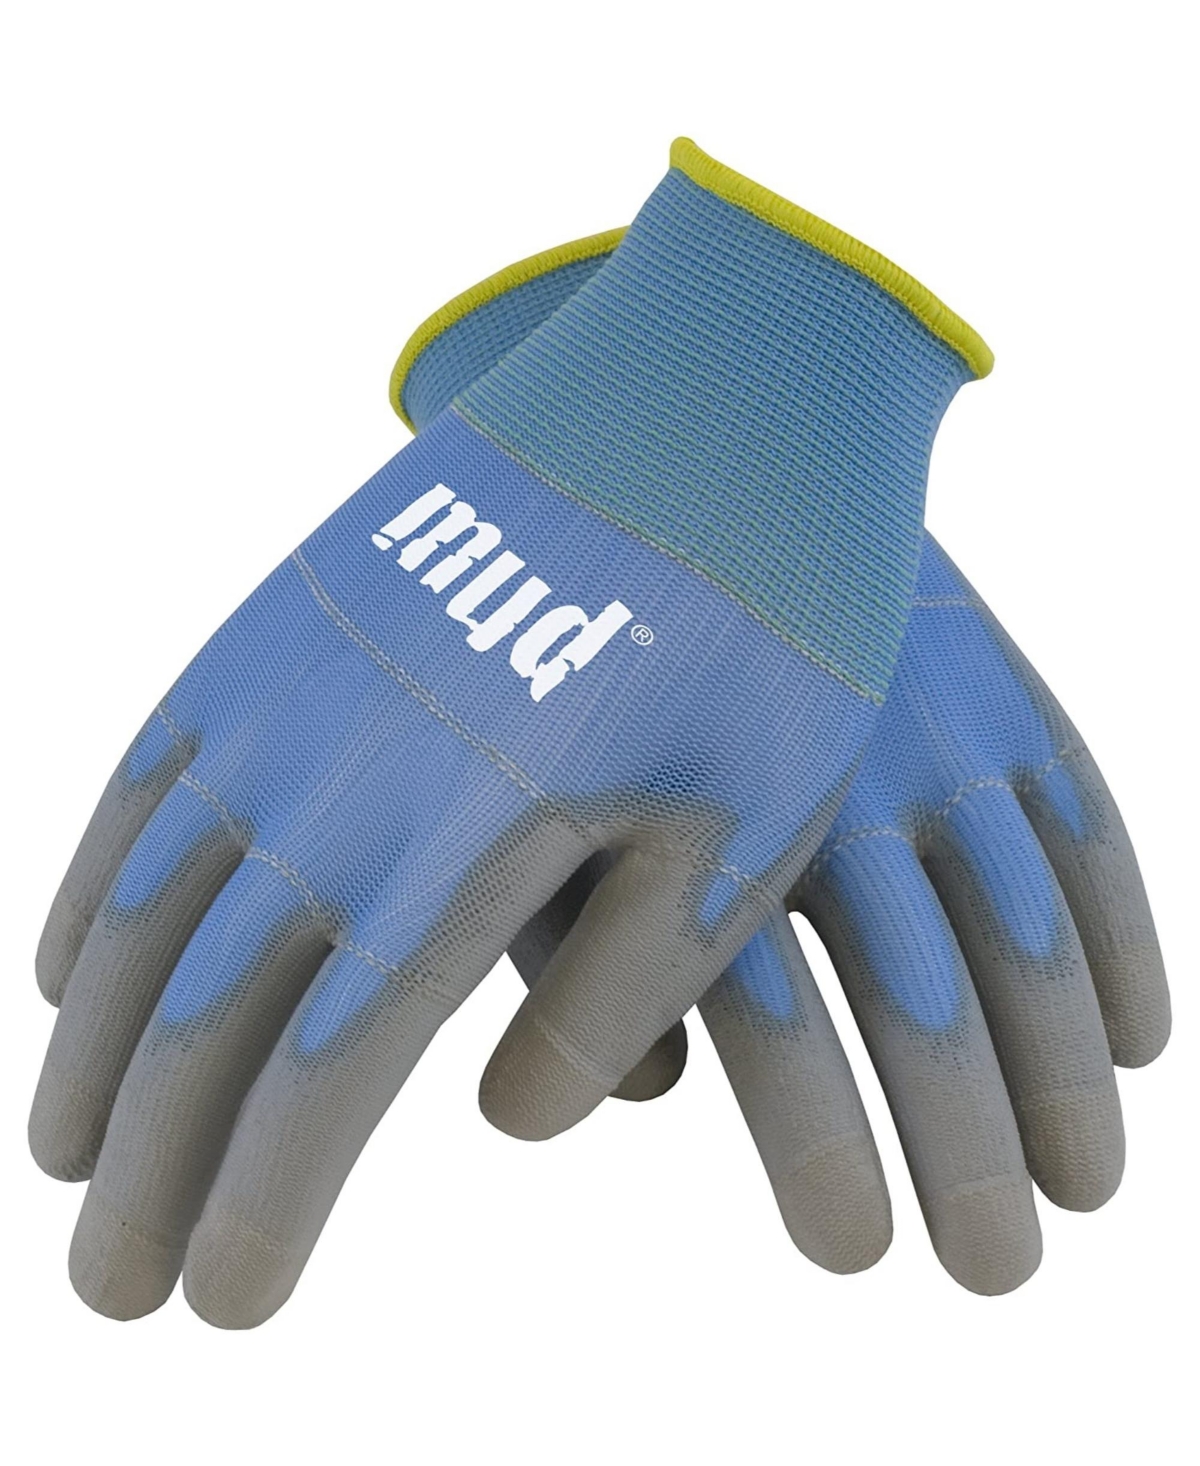 028B L Smart Mud Glove, Large, Blueberry - Blue